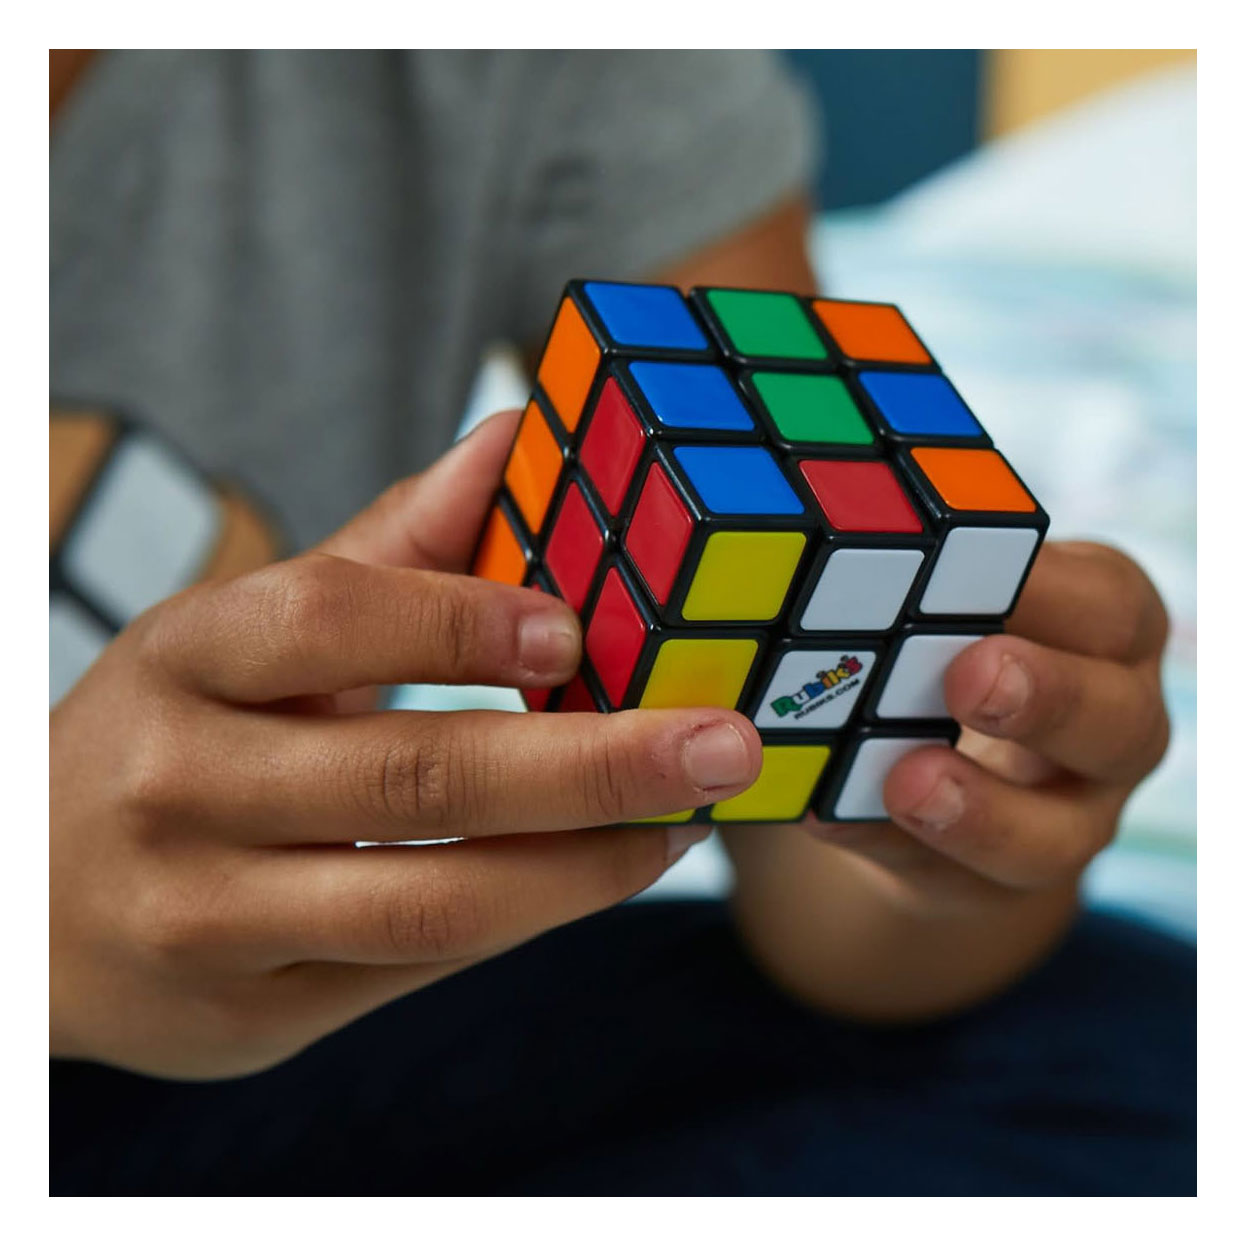 Rubik's Starter Pack (3x3, Edge) Gehirnpuzzle